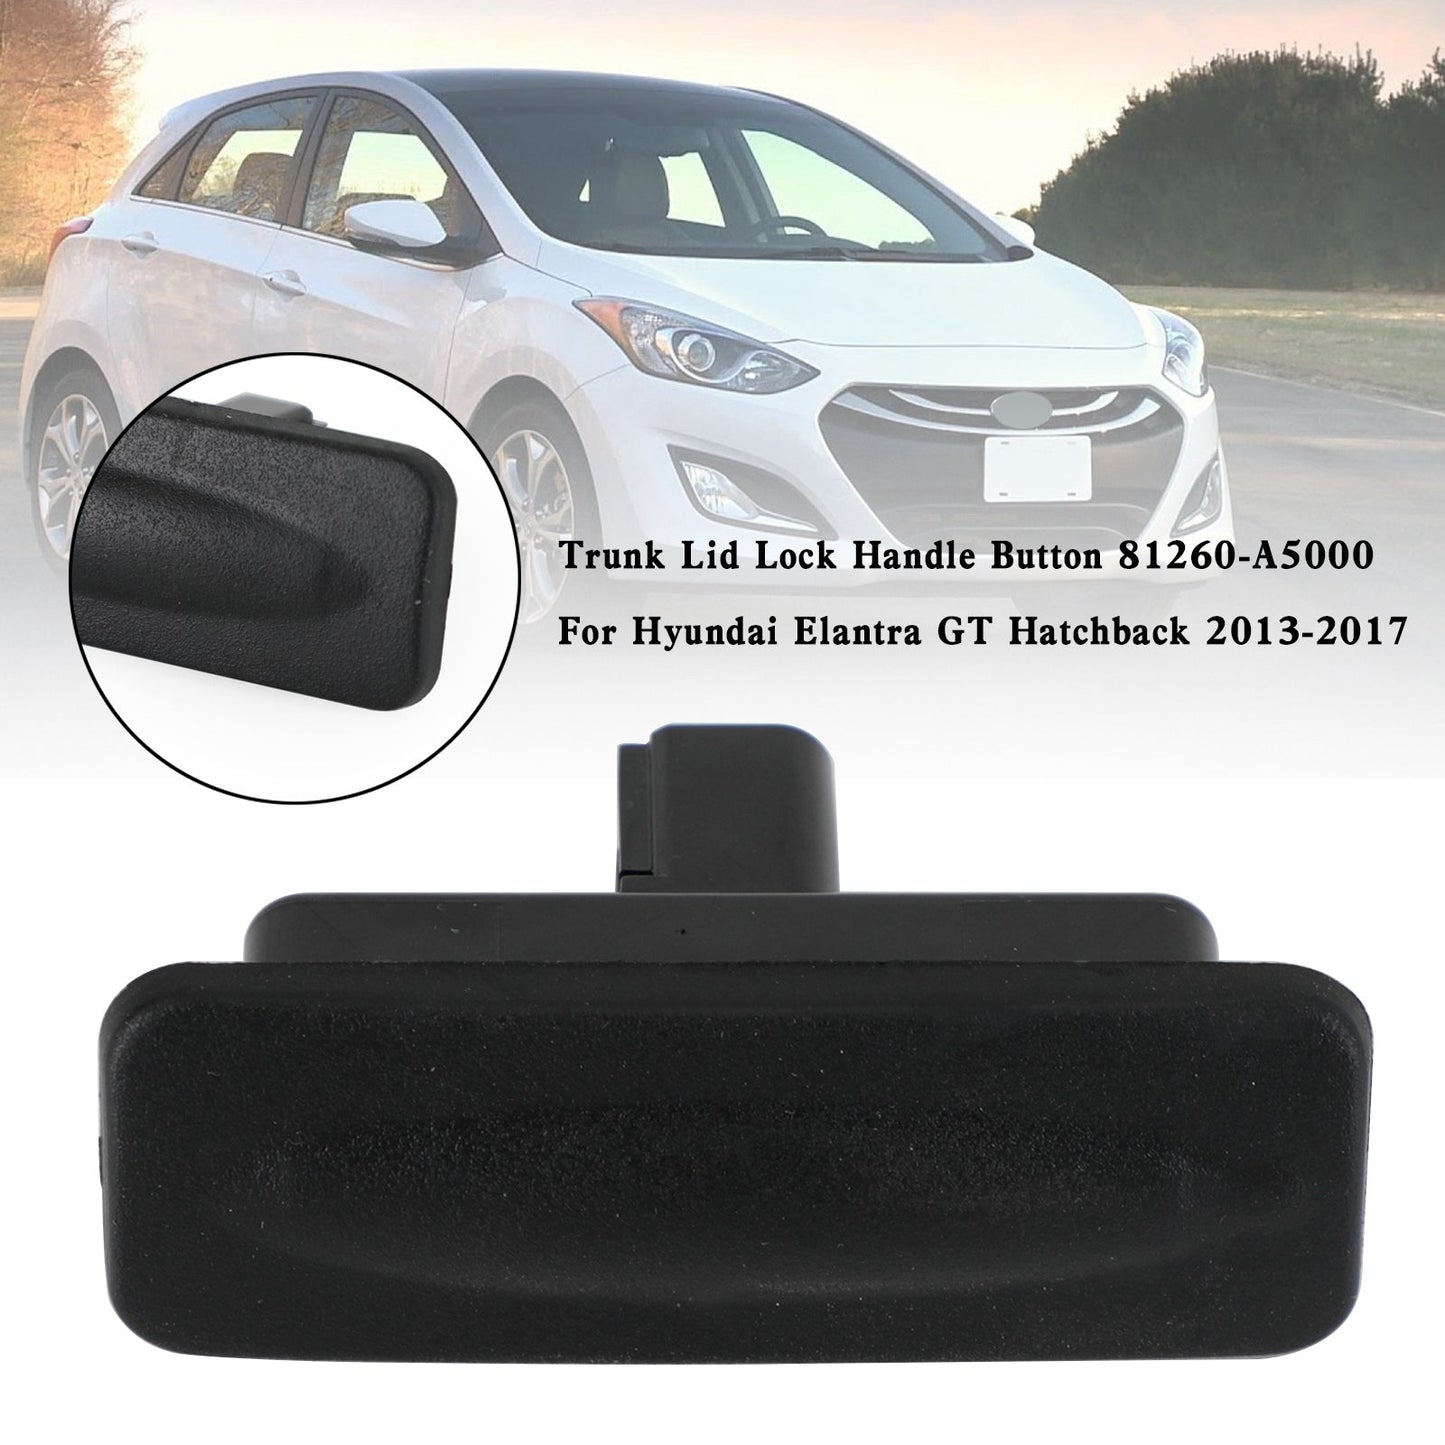 Trunk Lid Lock Handle Button 81260-A5000 For Hyundai Elantra GT Hatchback 13-17